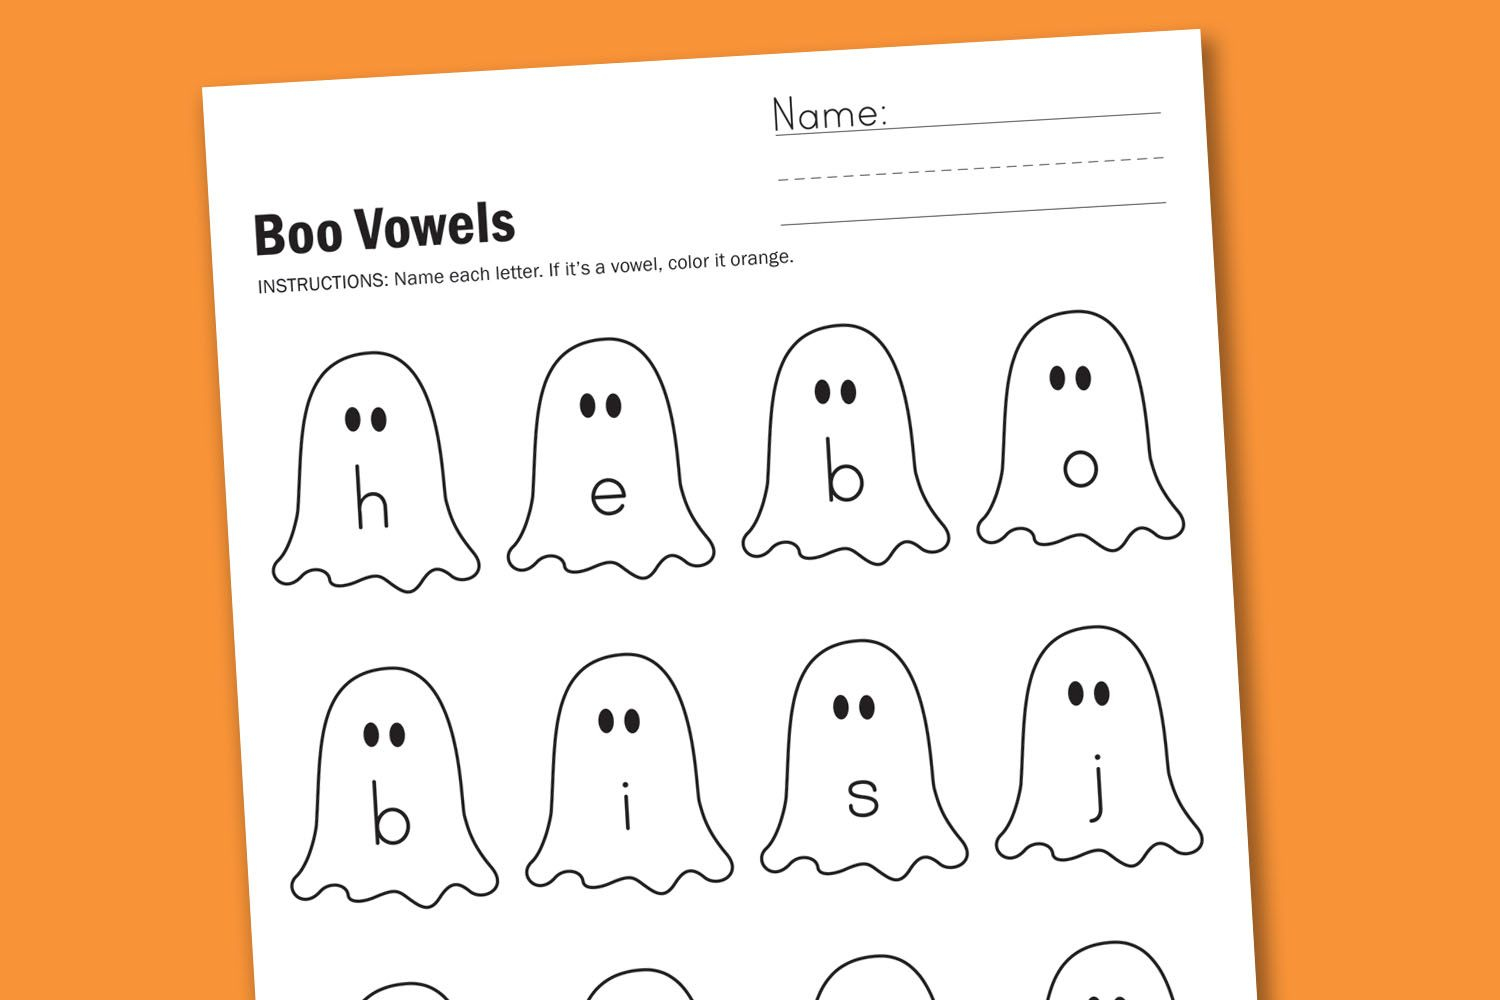 Worksheet Wednesday: Boo Vowels | Vowel Worksheets, Vowel